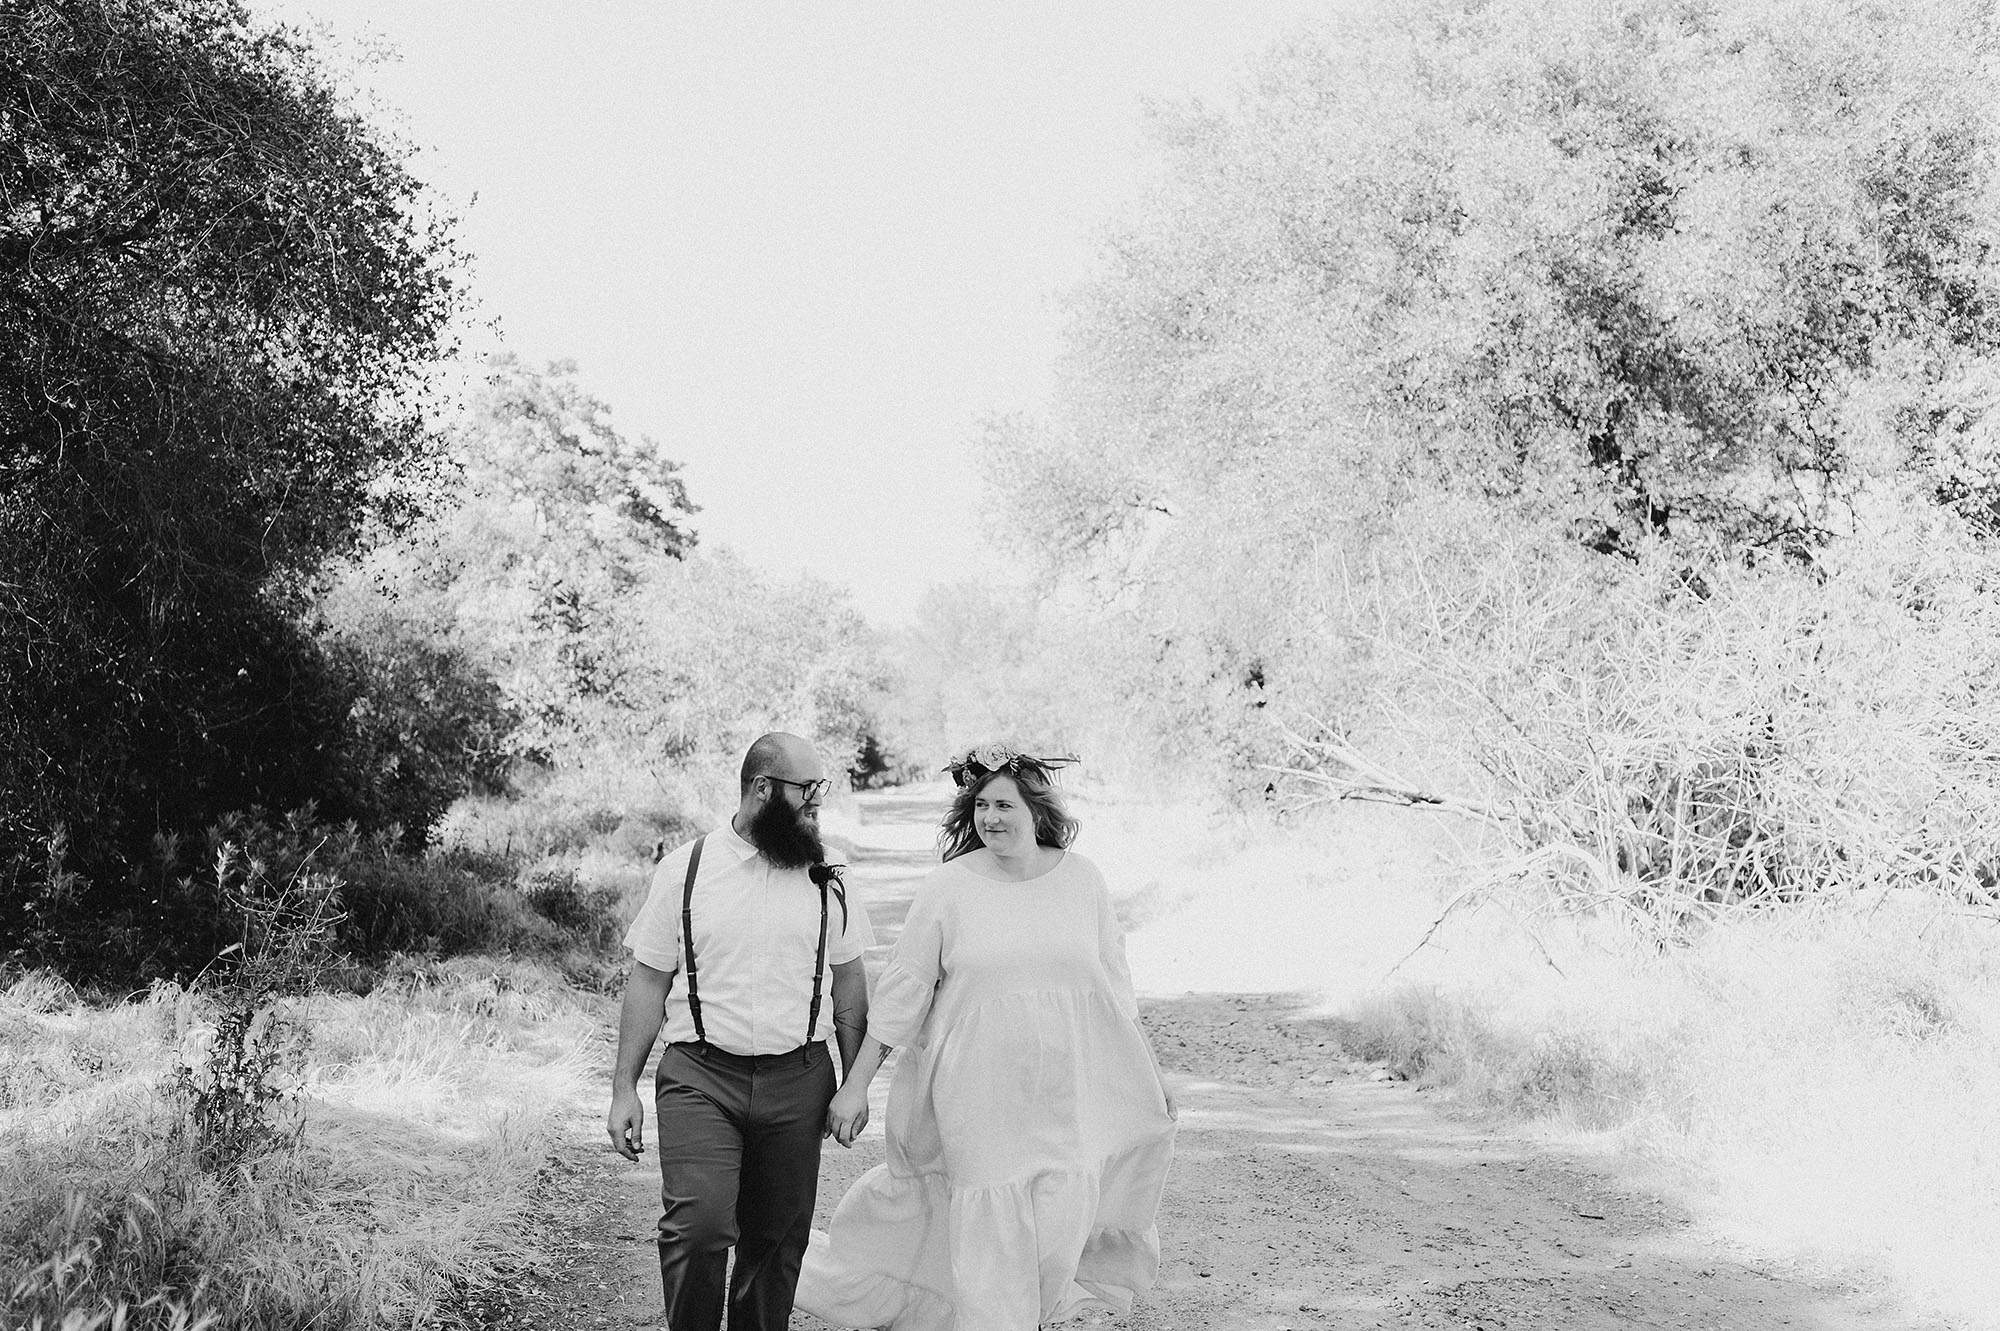 Bride & Groom Walking Down a Road Together